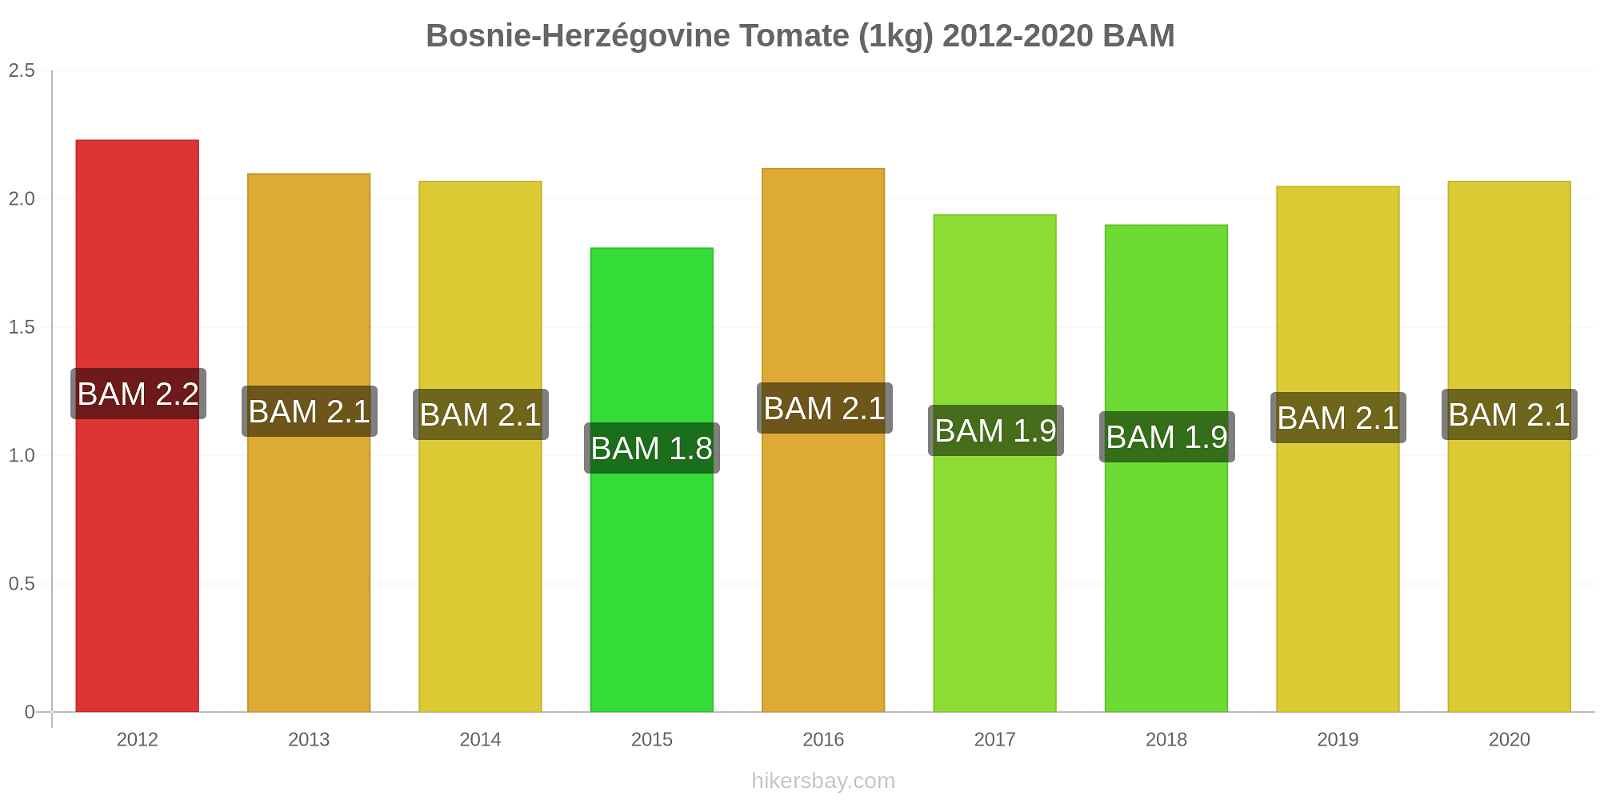 Bosnie-Herzégovine changements de prix Tomate (1kg) hikersbay.com